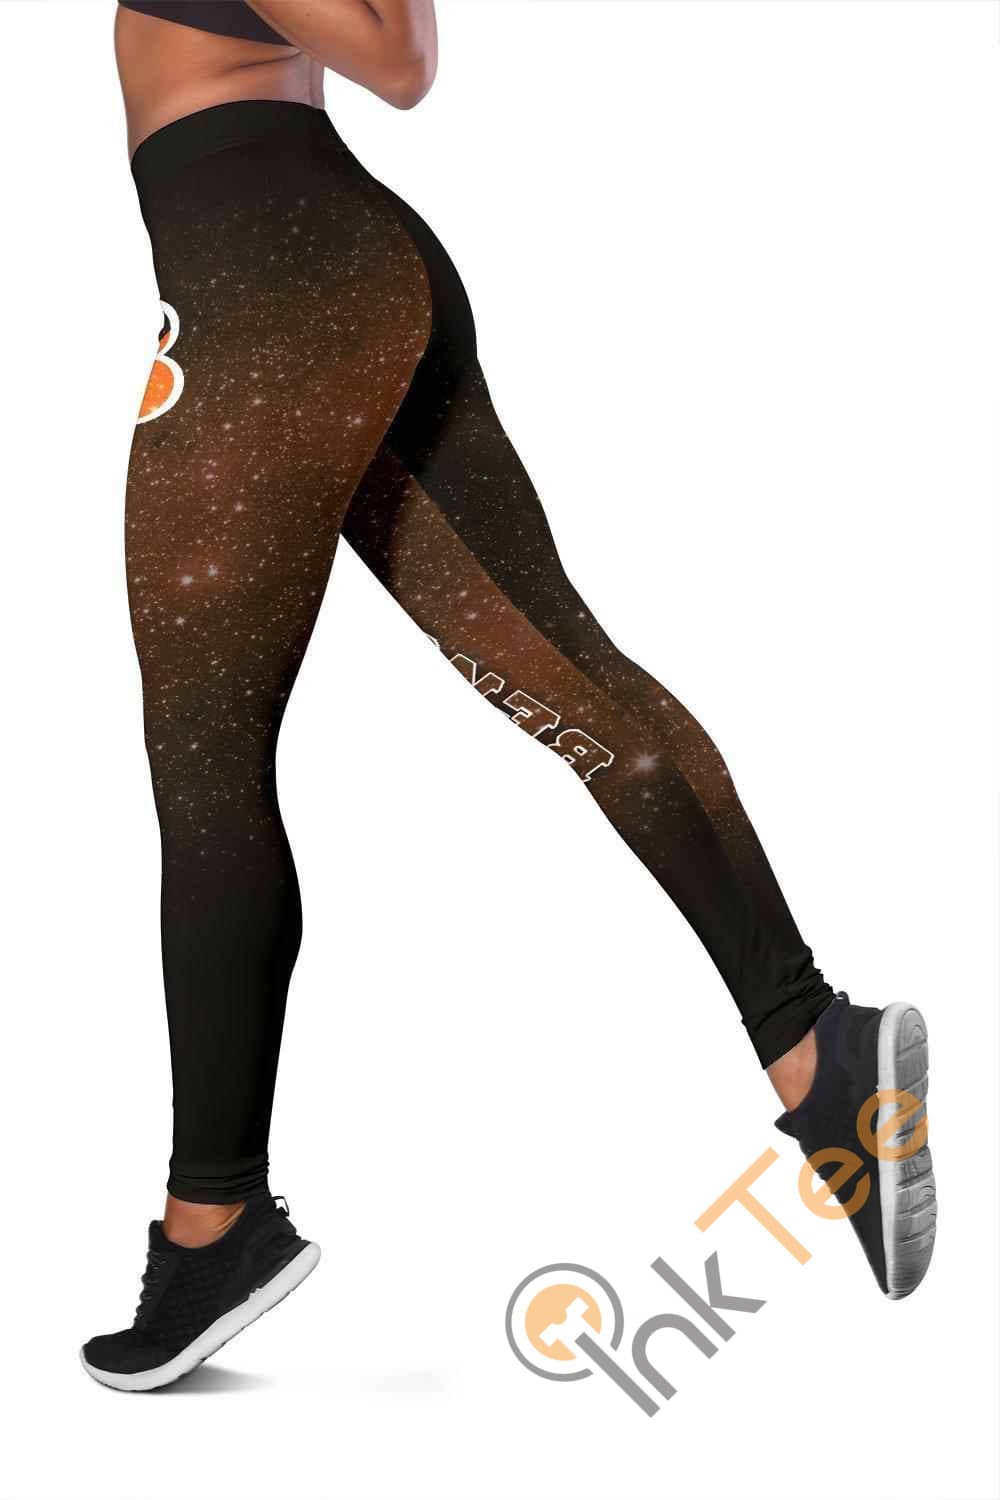 Inktee Store - Cincinnati Bengals 3D All Over Print For Yoga Fitness Women'S Leggings Image